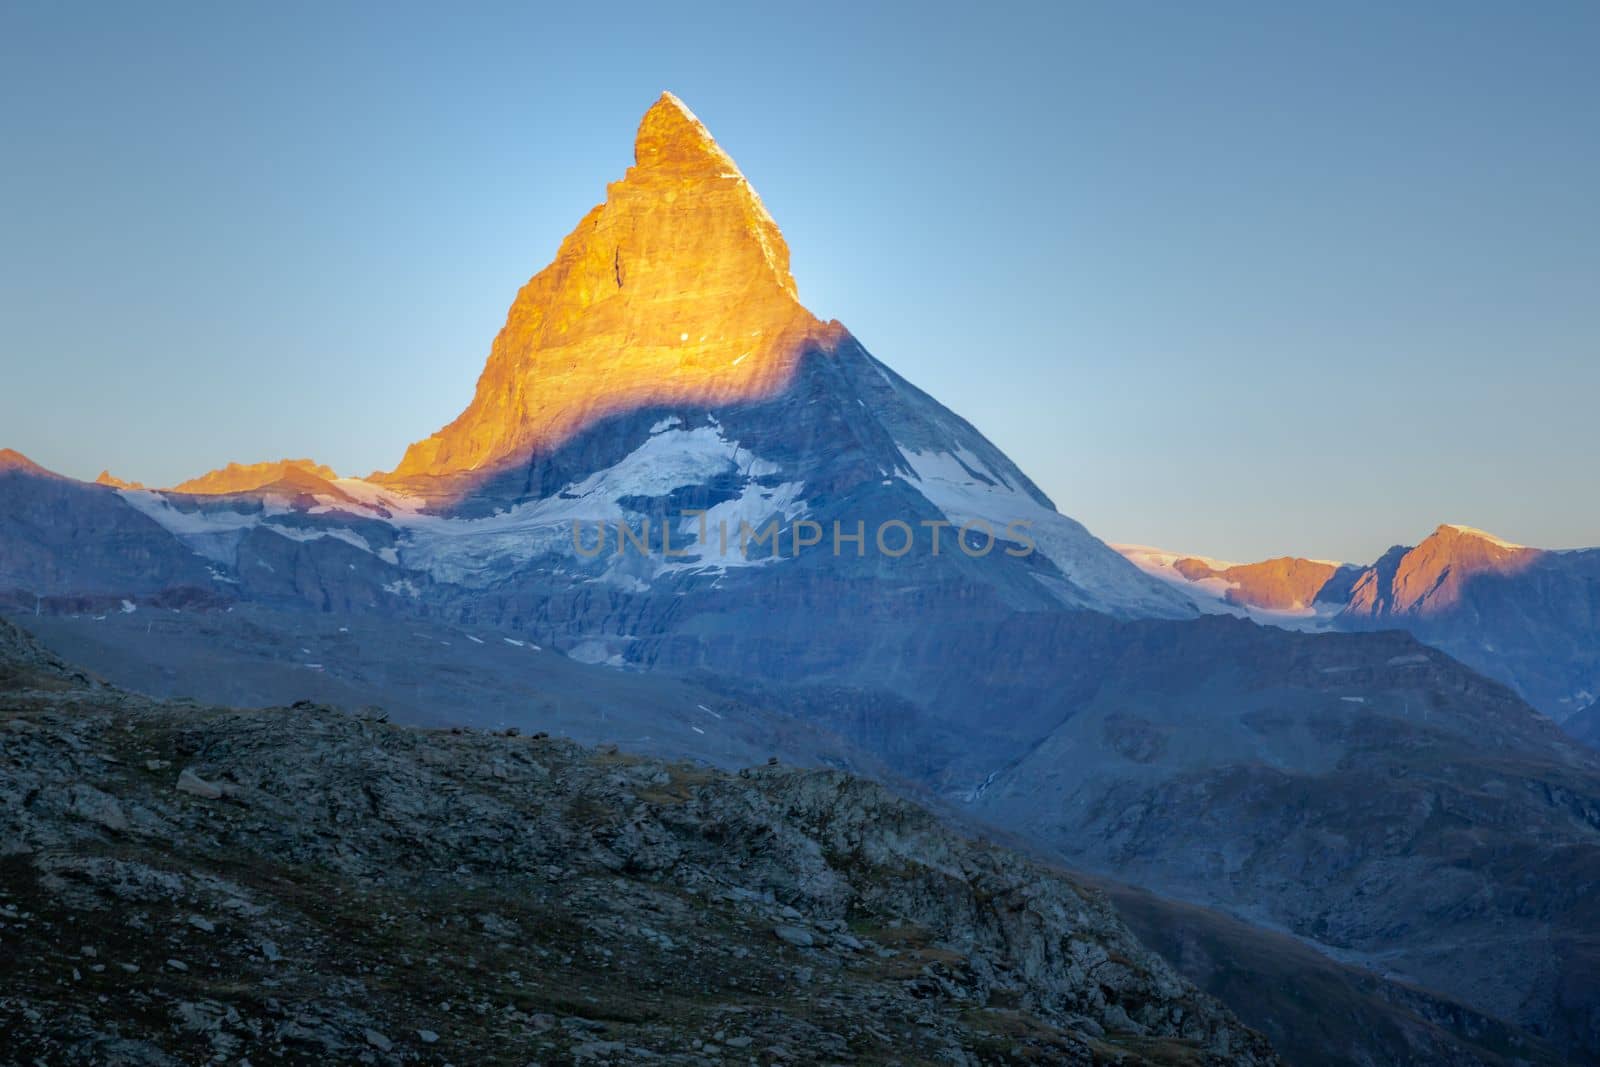 Reflection of the Matterhorn on blue and placid lake at sunrise, Swiss Alps, Zermatt, Switzerland